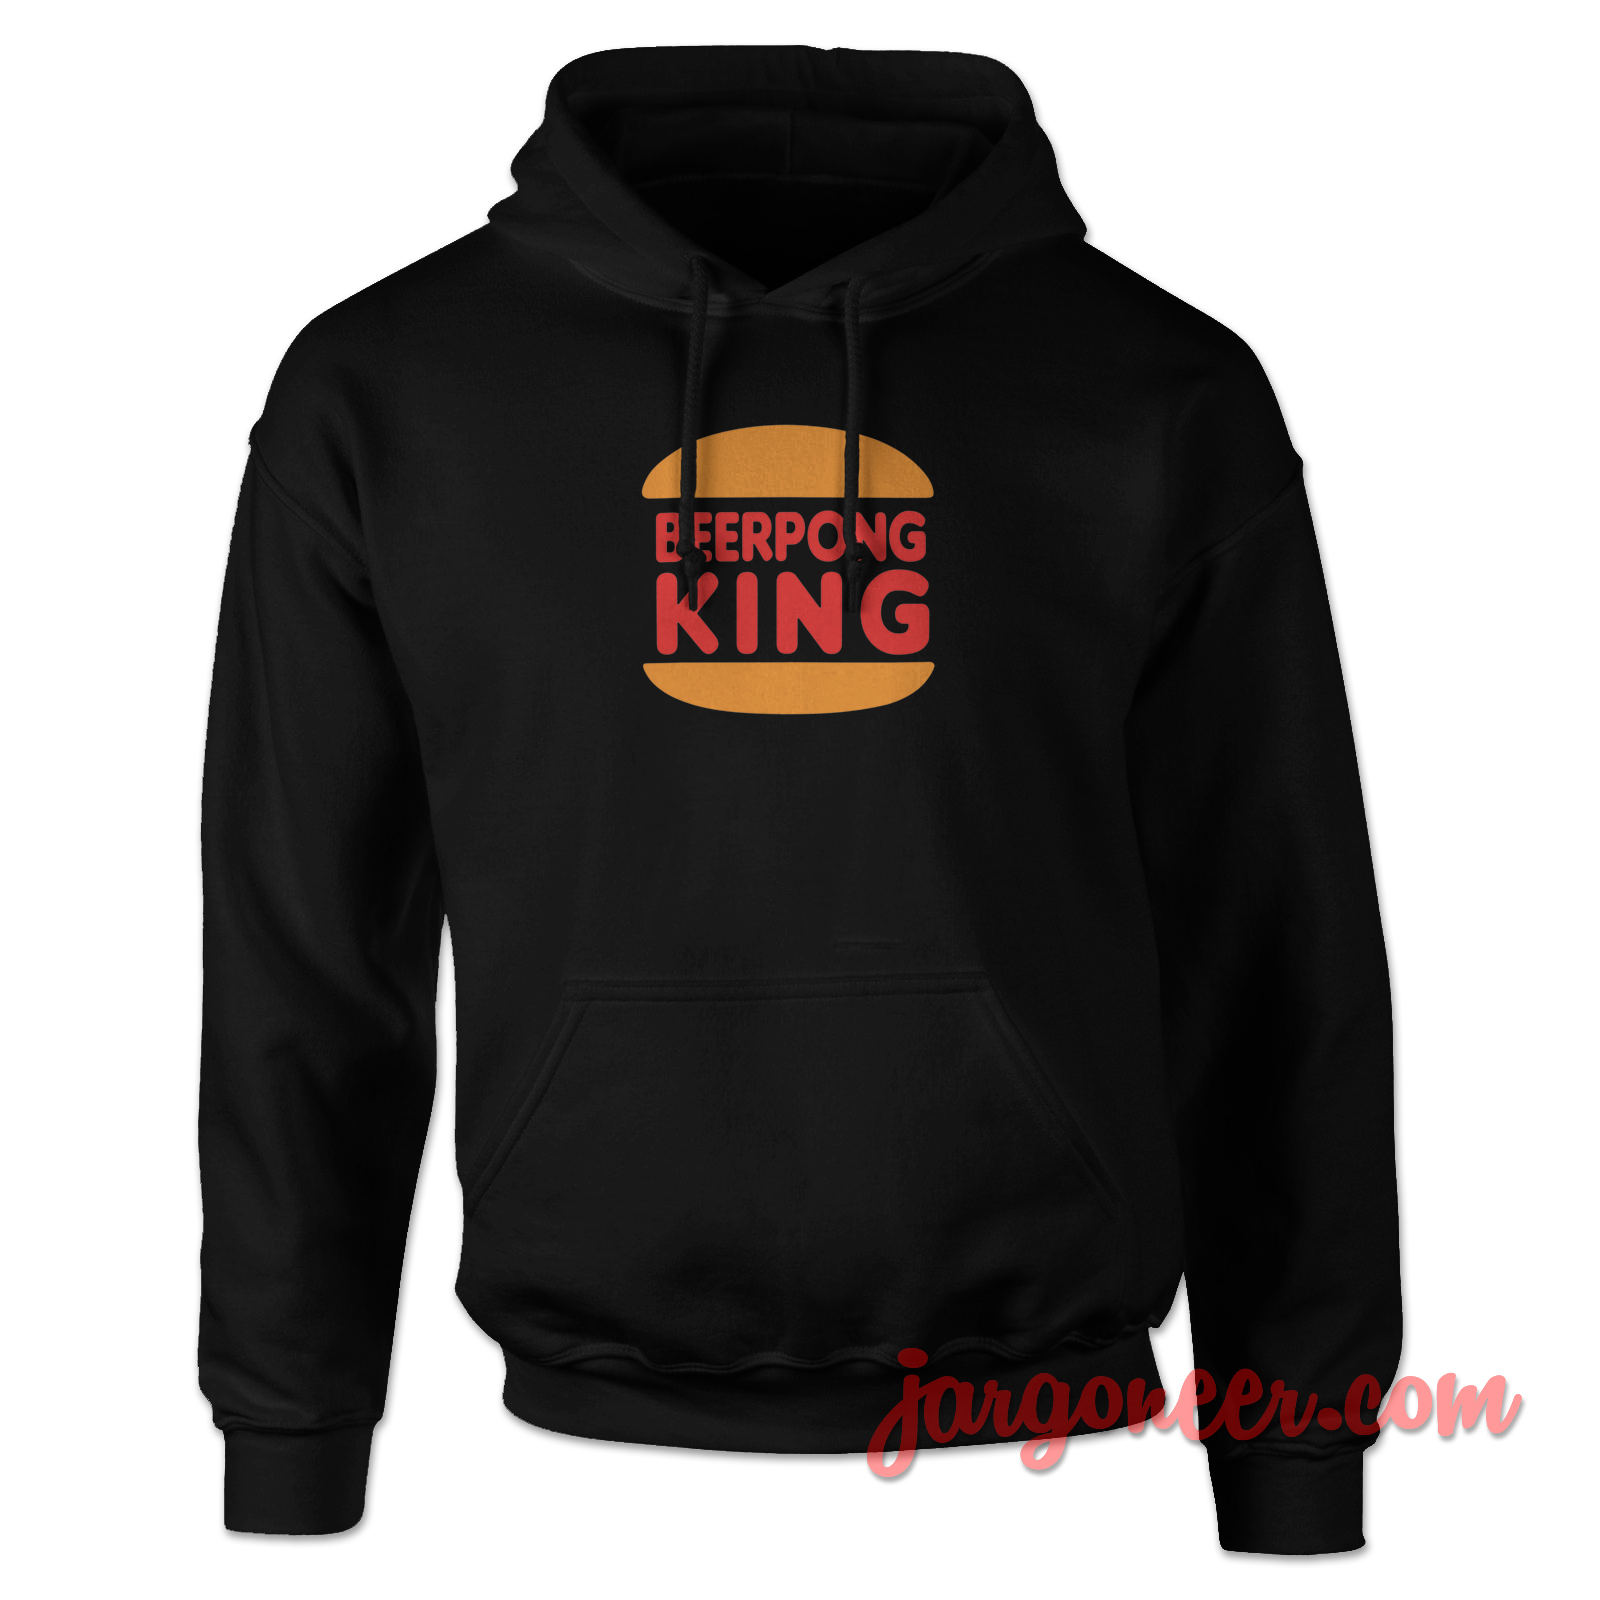 Beerpong King 3 - Shop Unique Graphic Cool Shirt Designs